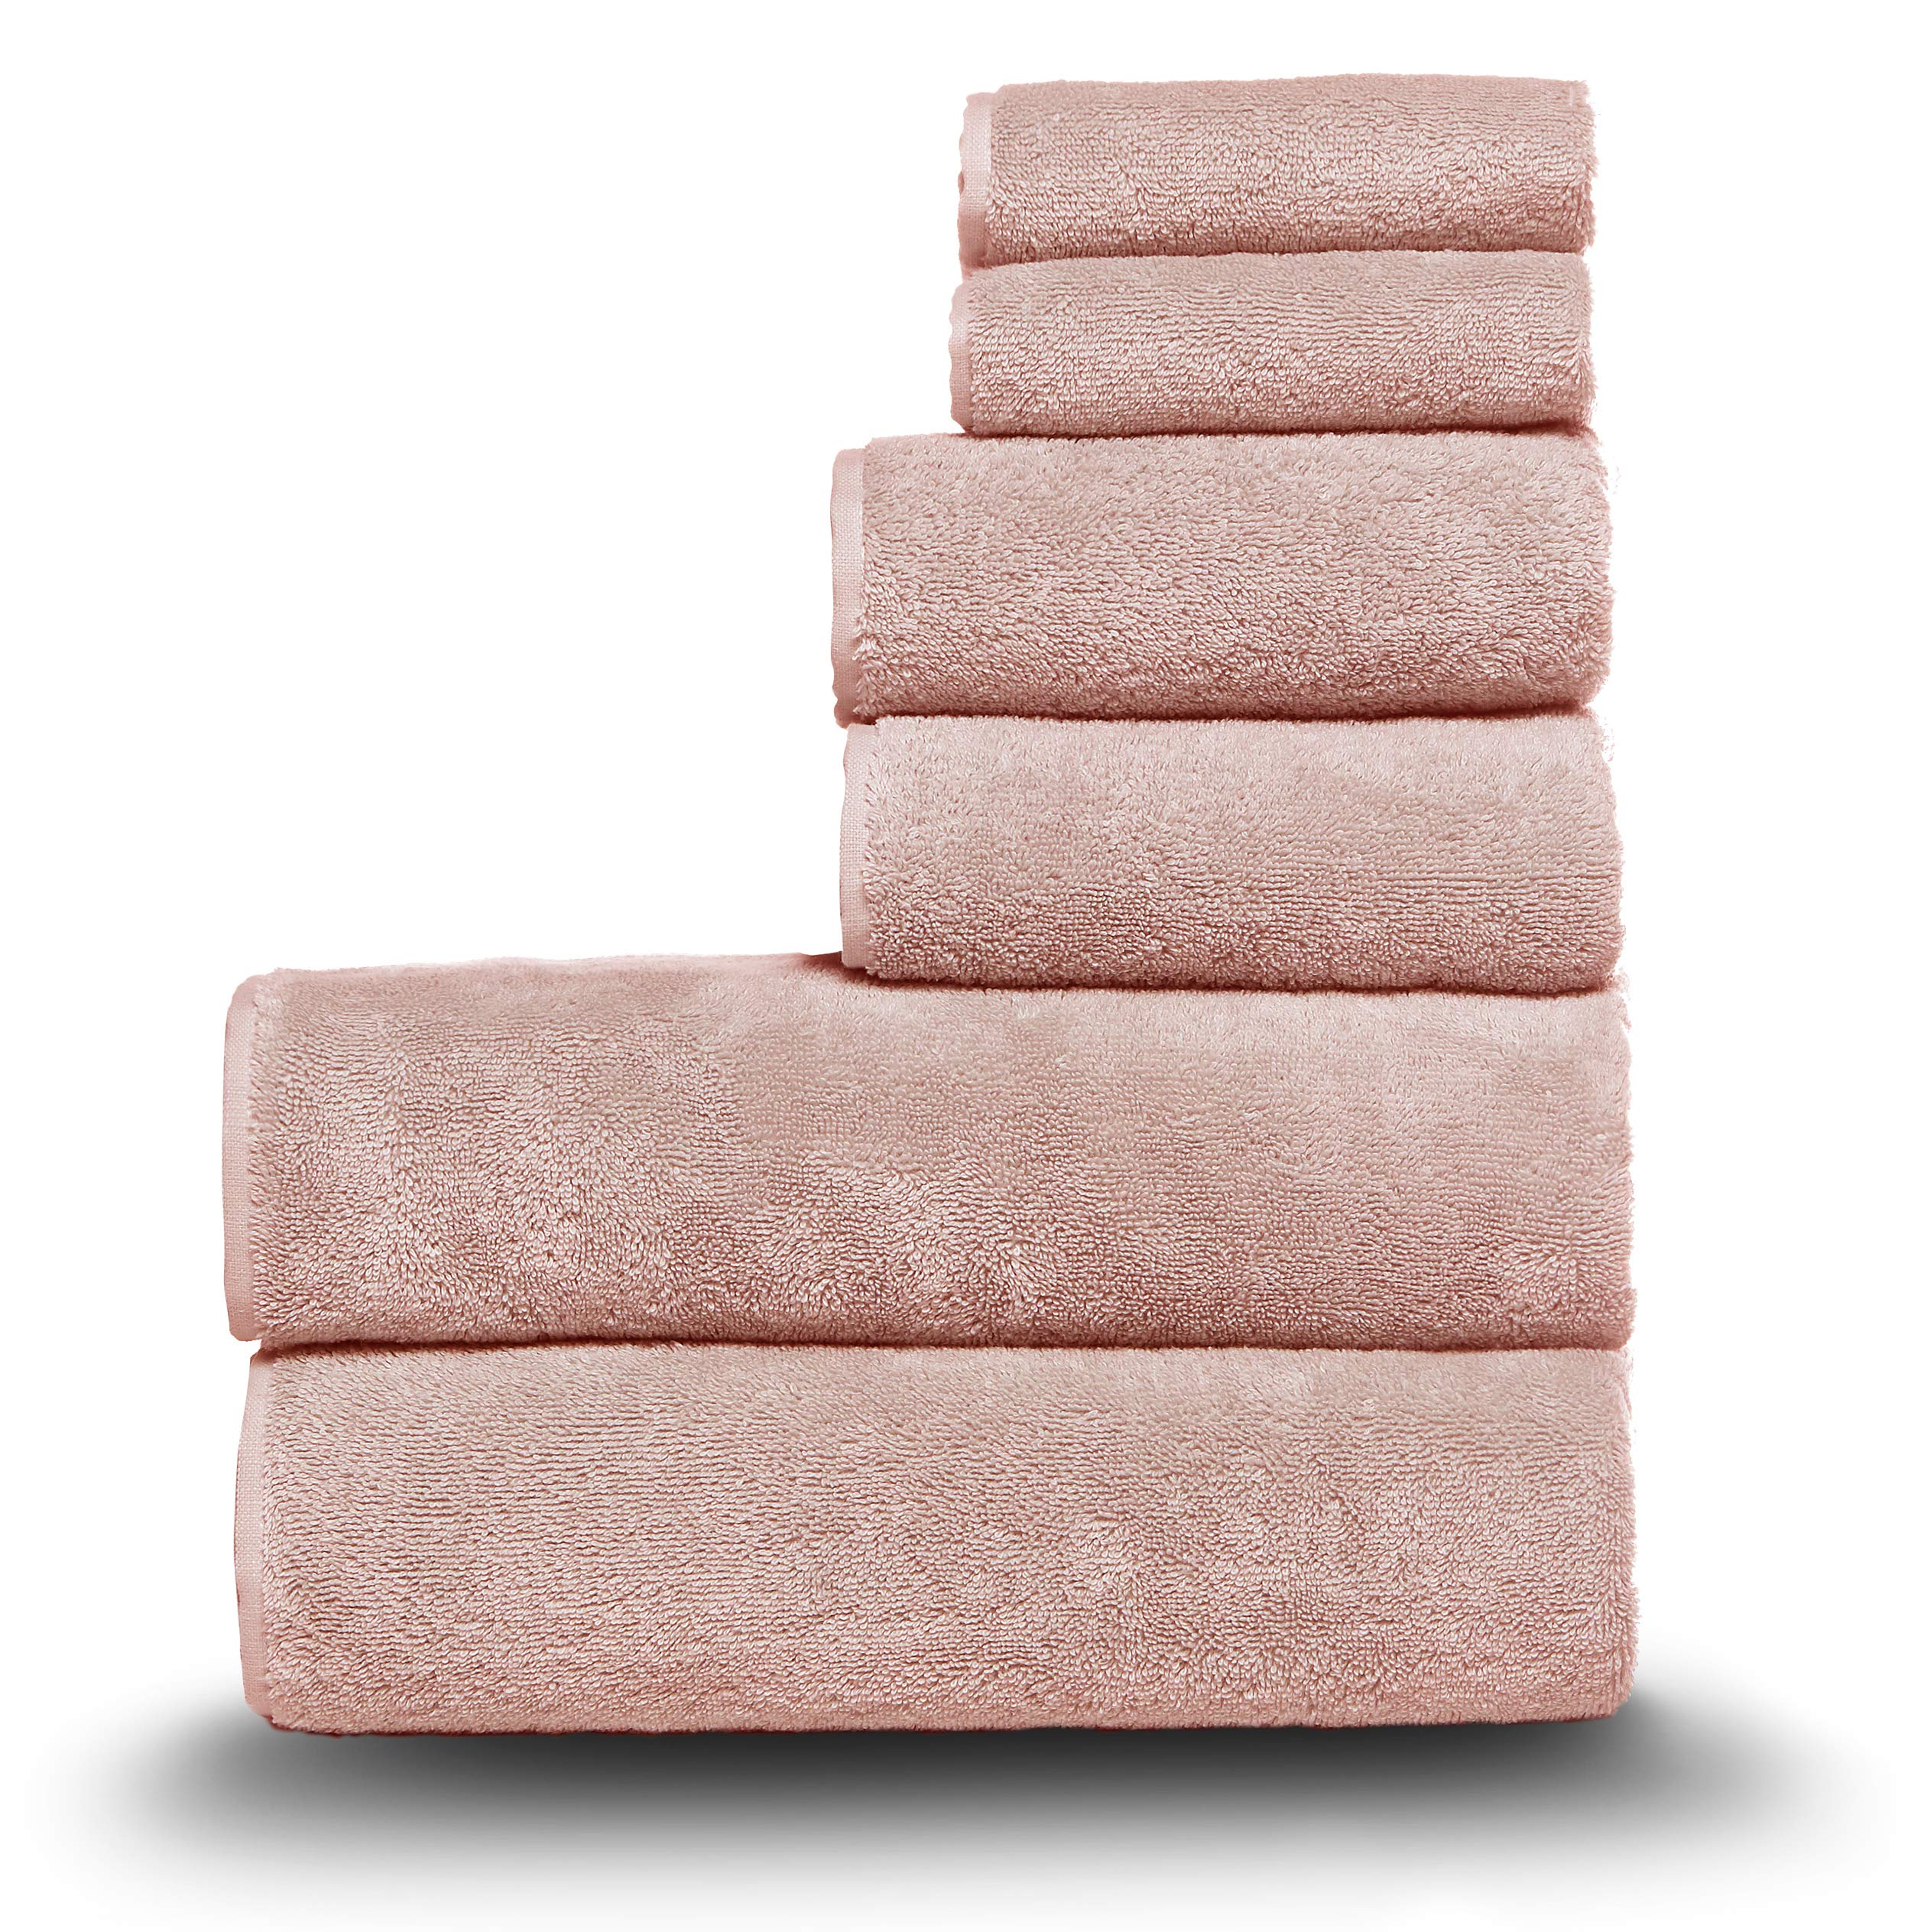 Arus Classic Towel Set 100% Turkish Cotton Hotel Spa Towel Set, Bath Towels, Hand Towels and Washcloth, Powder Pink, 6 Pieces Set